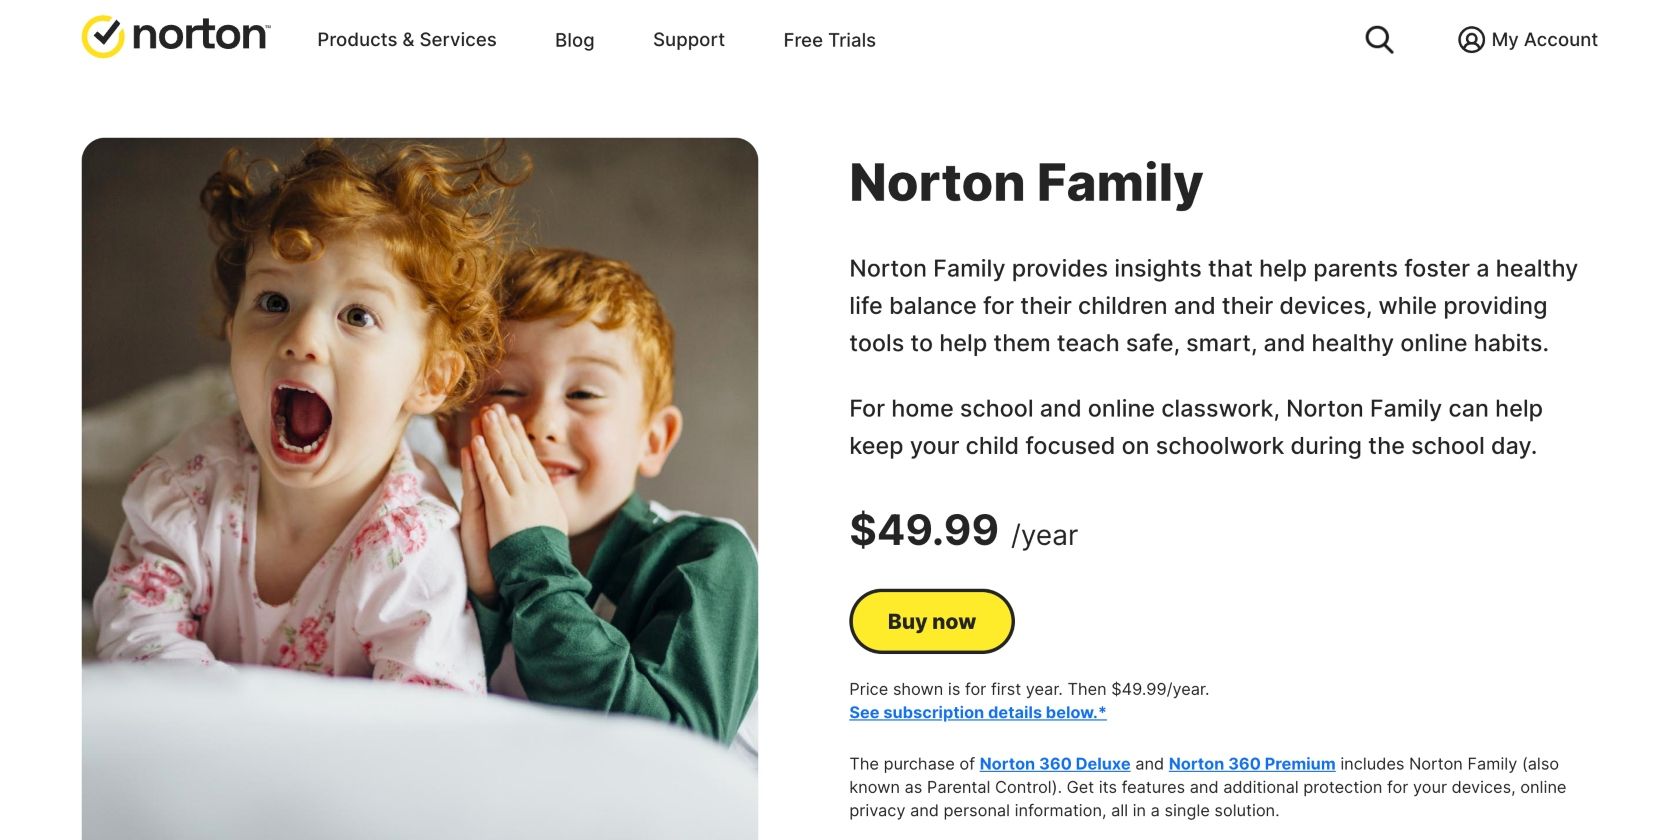 Norton Family website